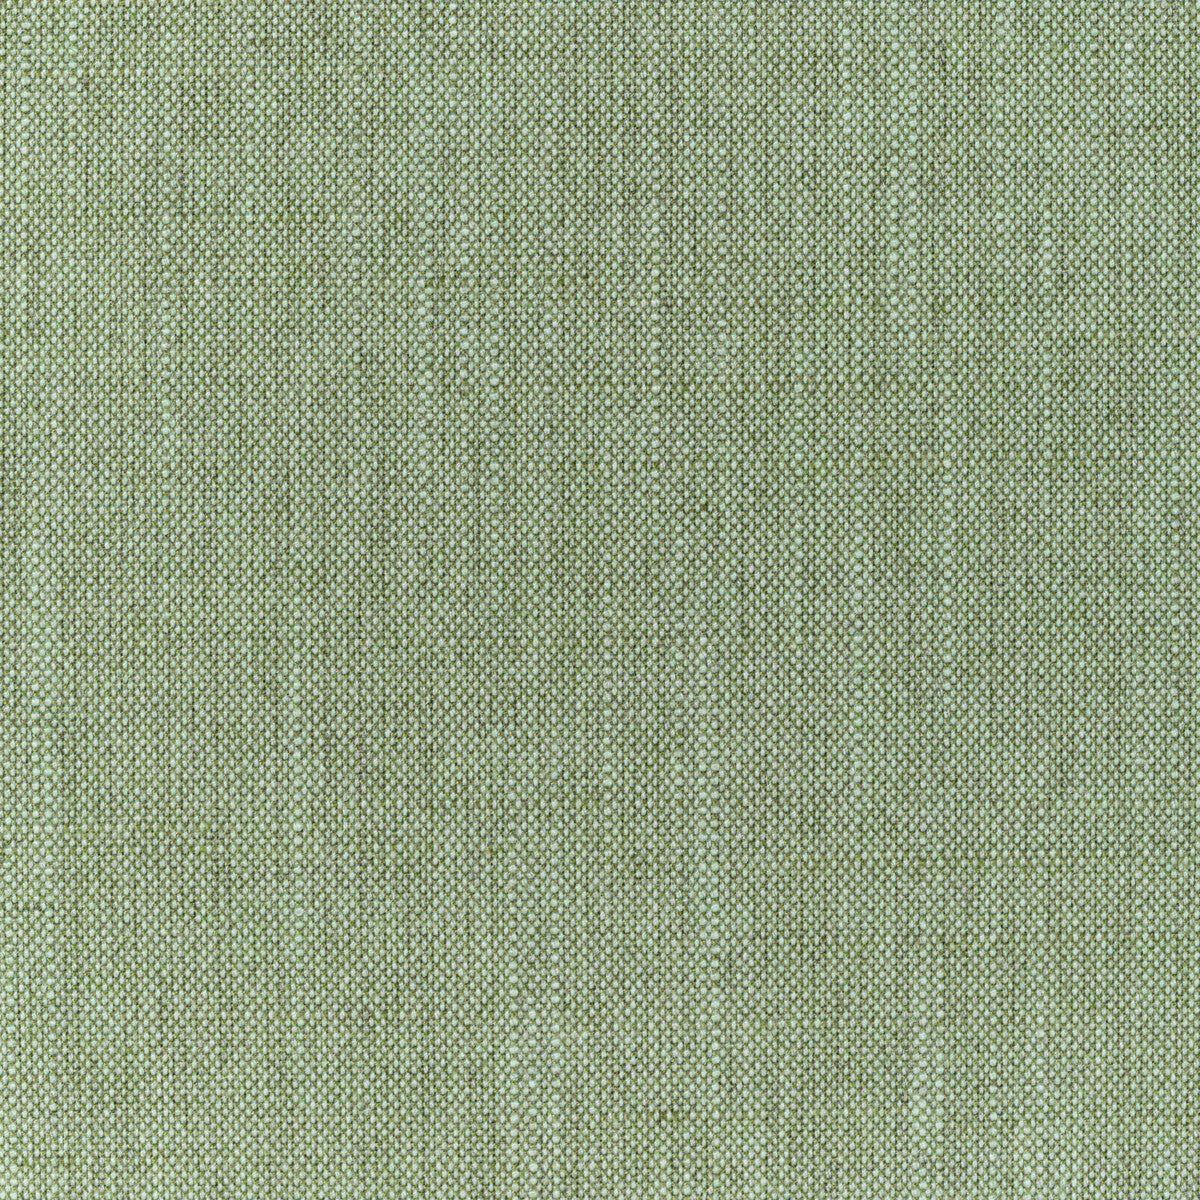 Kravet Smart fabric in 36112-30 color - pattern 36112.30.0 - by Kravet Smart in the Performance Kravetarmor collection